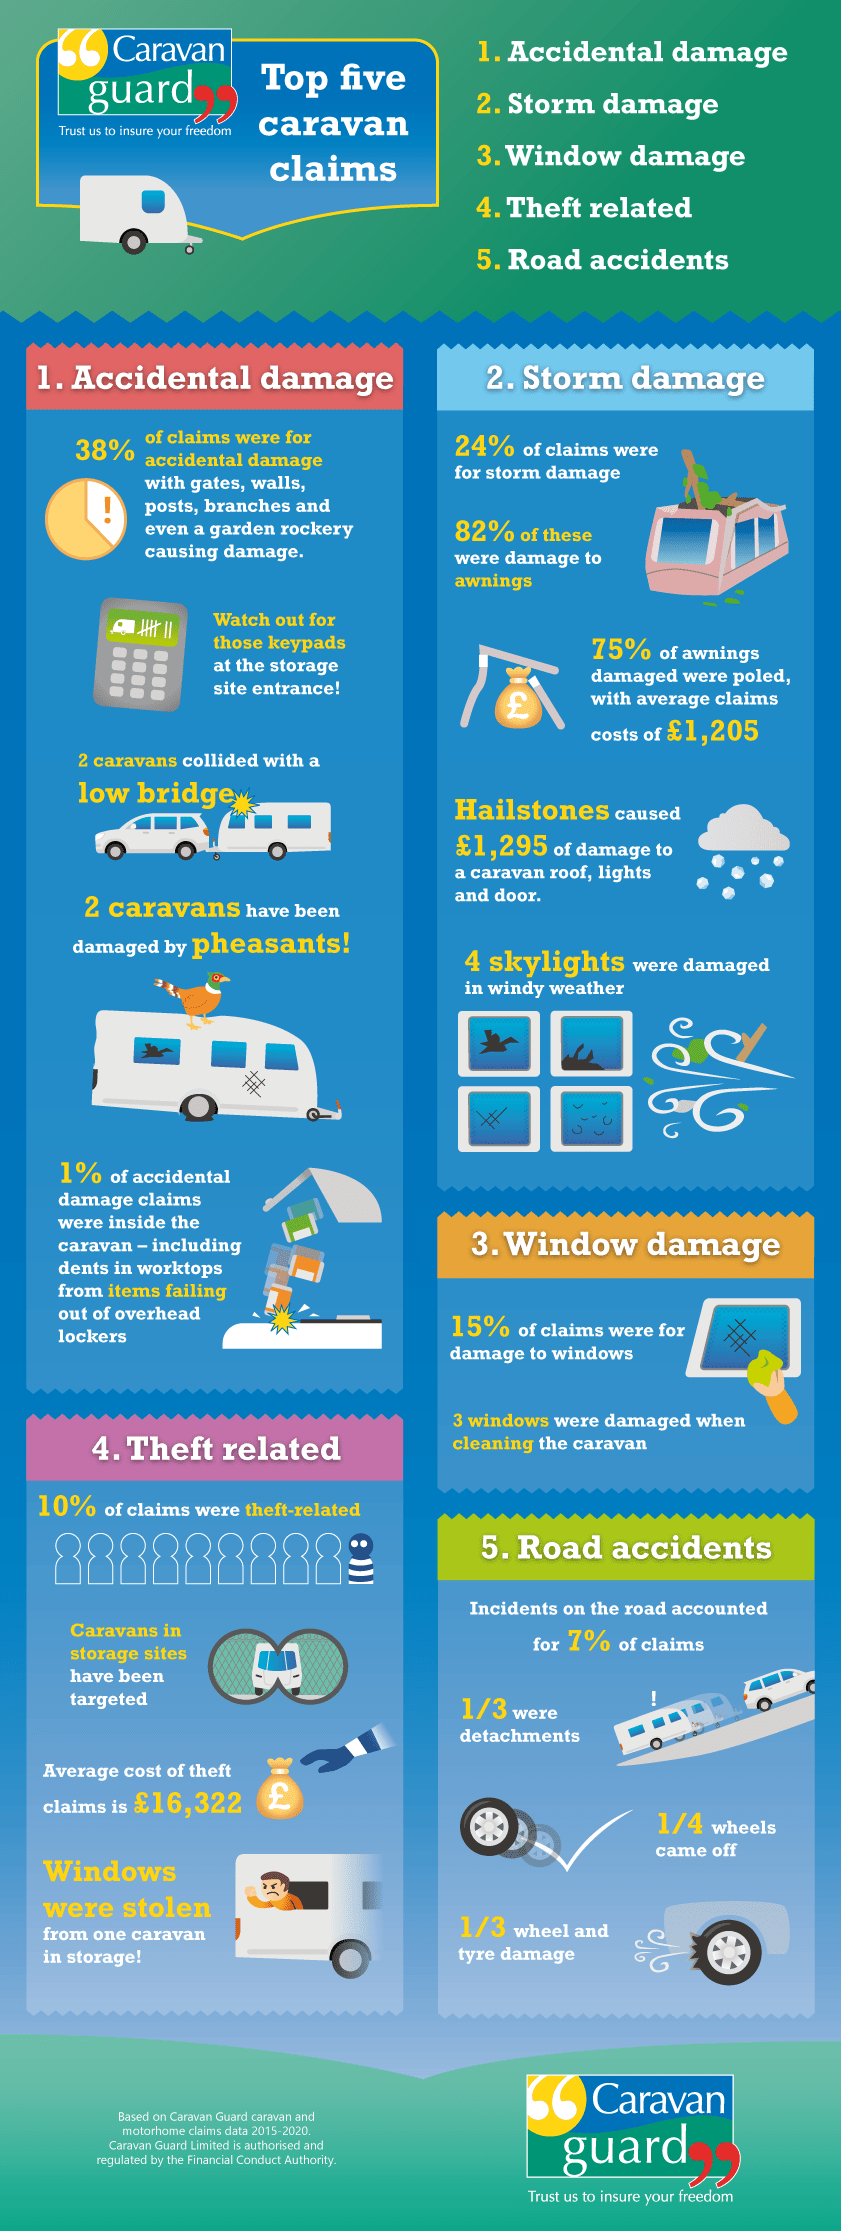 Caravan insurance claims infographic